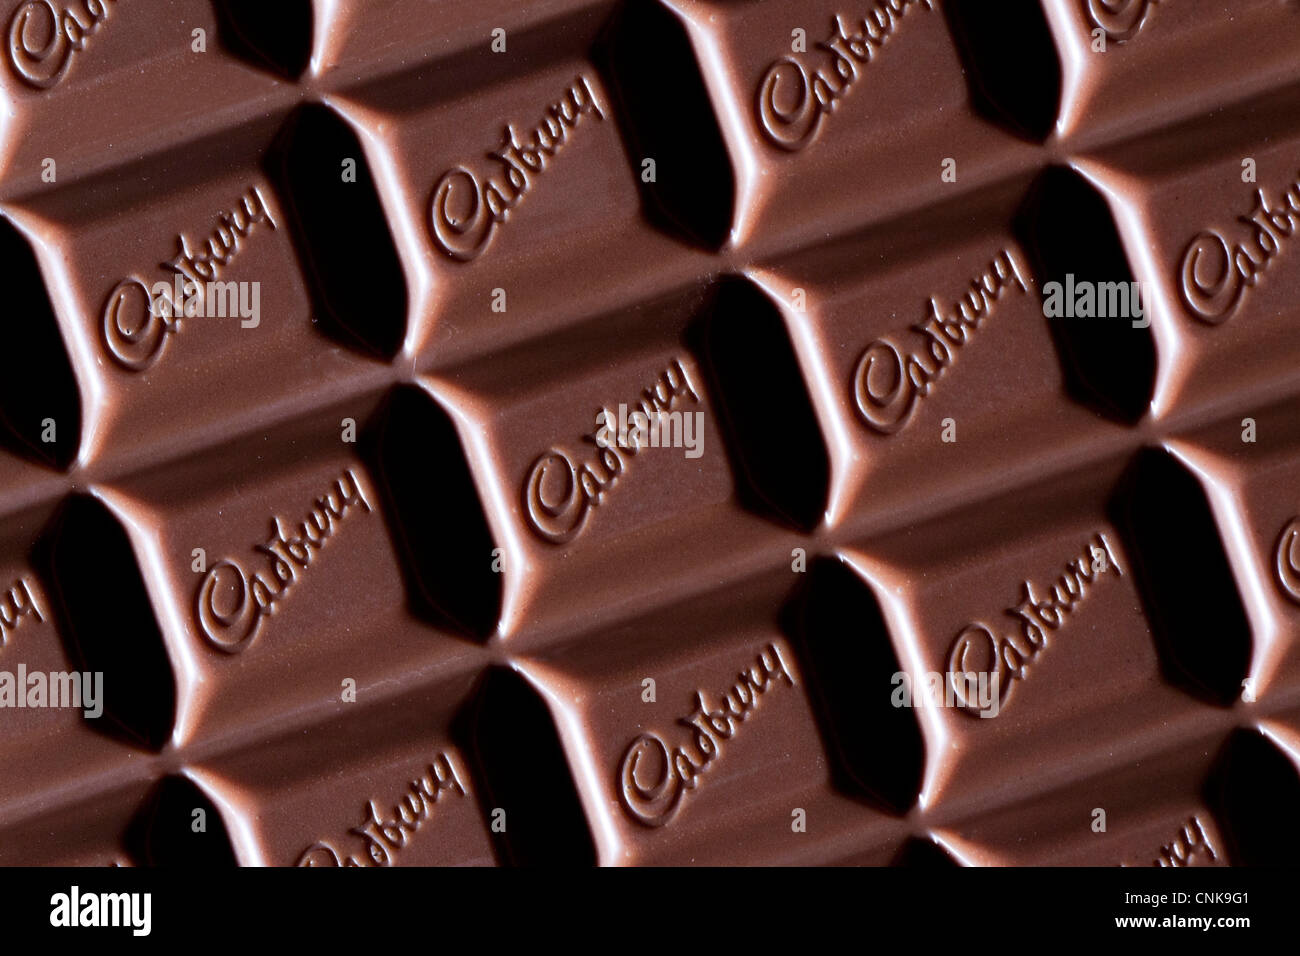 Cadbury milk chocolate bar Stock Photo